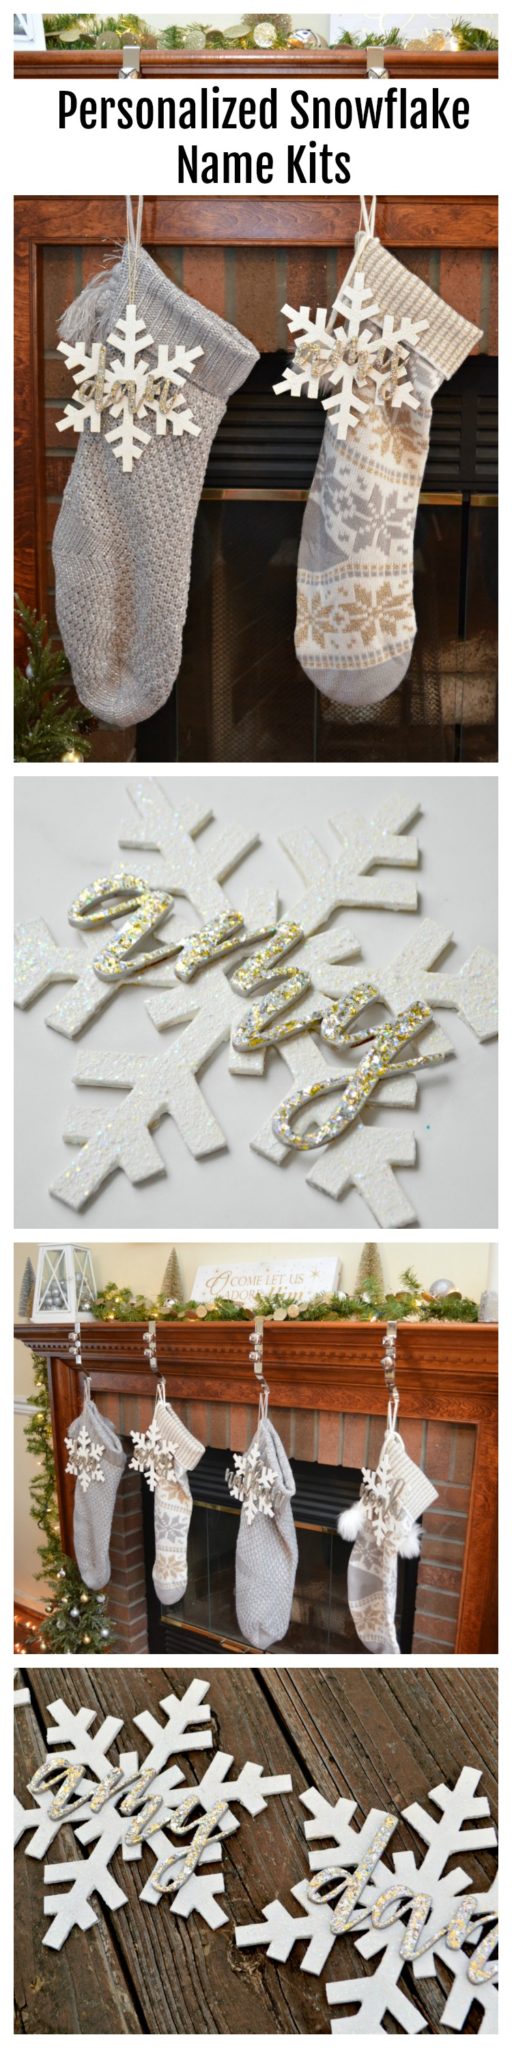 Personalized Snowflake Name Kits